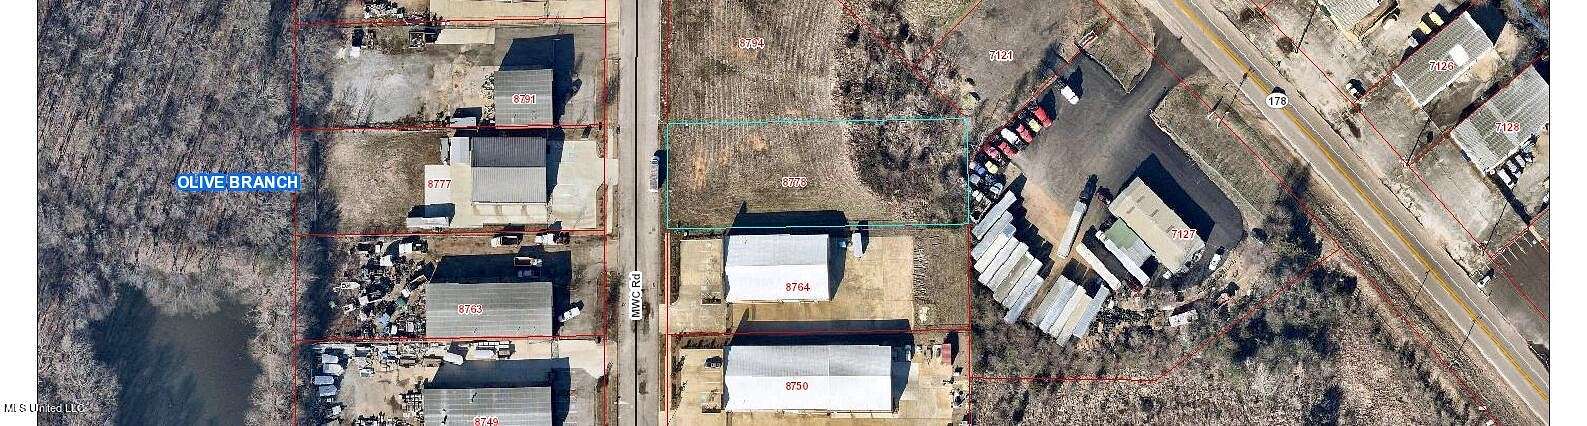 0.66 Acres of Commercial Land for Sale in Olive Branch, Mississippi